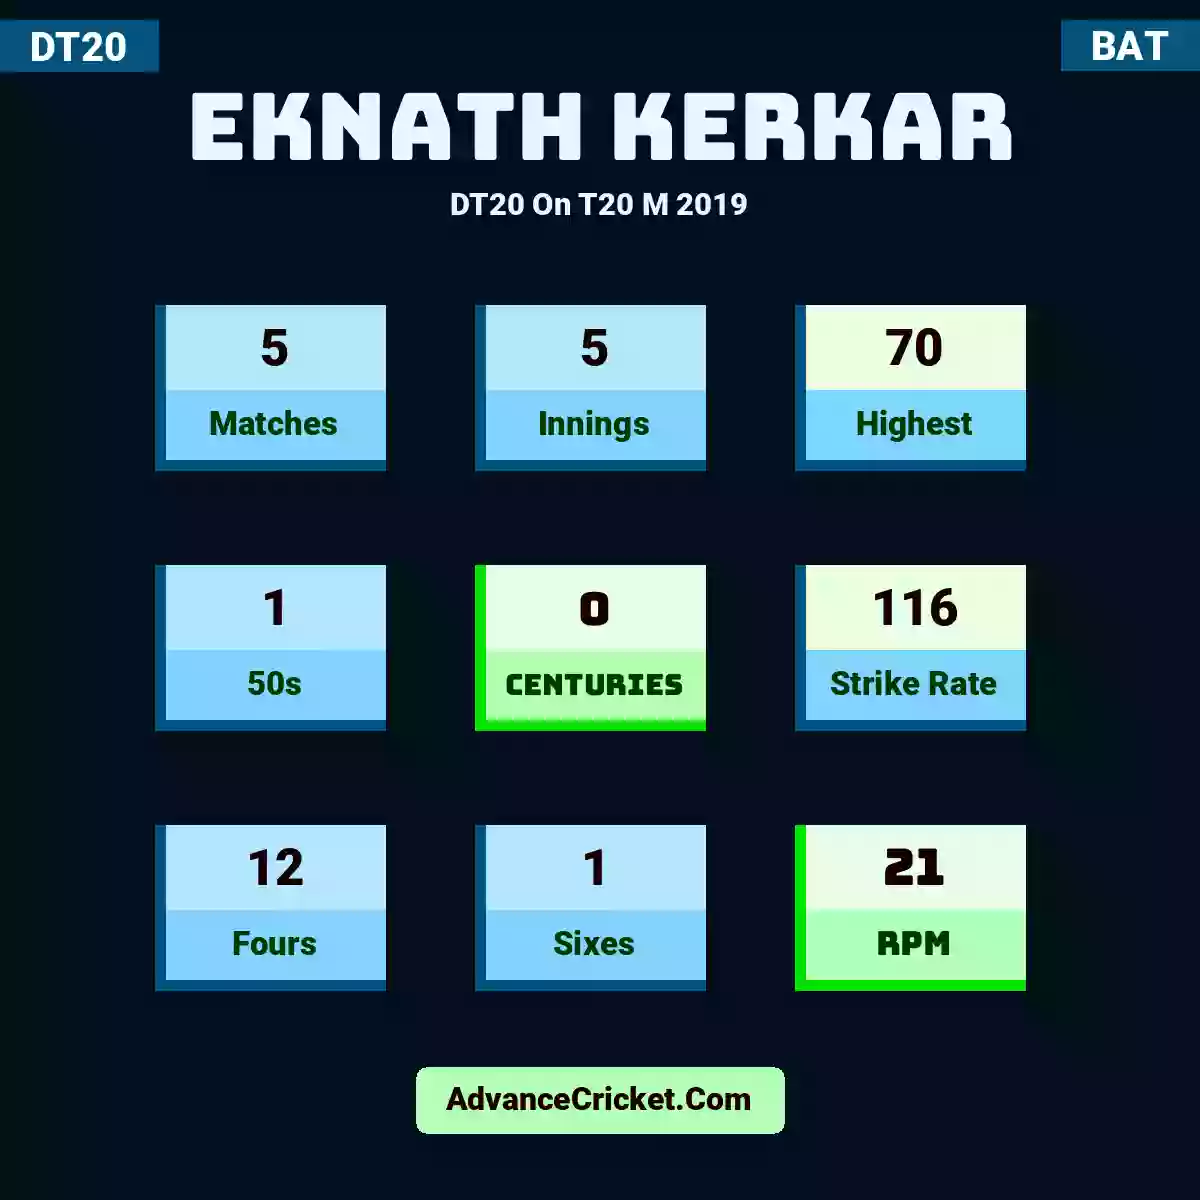 Eknath Kerkar DT20  On T20 M 2019, Eknath Kerkar played 5 matches, scored 70 runs as highest, 1 half-centuries, and 0 centuries, with a strike rate of 116. E.Kerkar hit 12 fours and 1 sixes, with an RPM of 21.